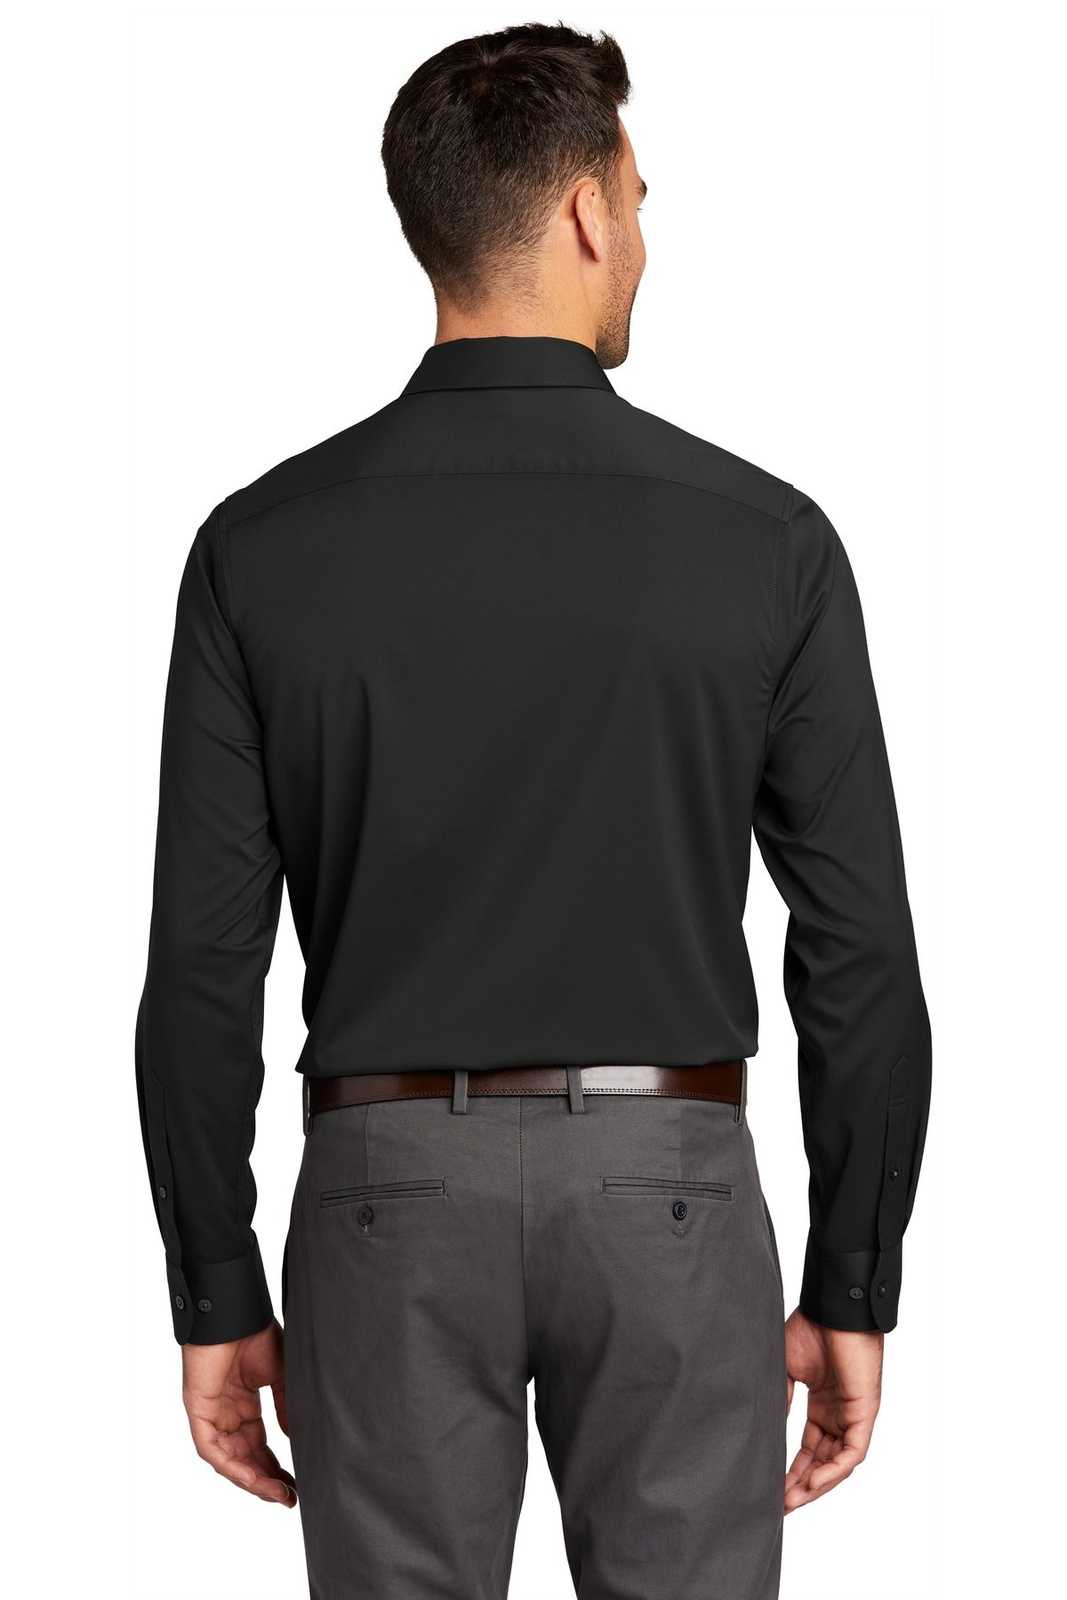 Port Authority W680 City Stretch Shirt - Black - HIT a Double - 1